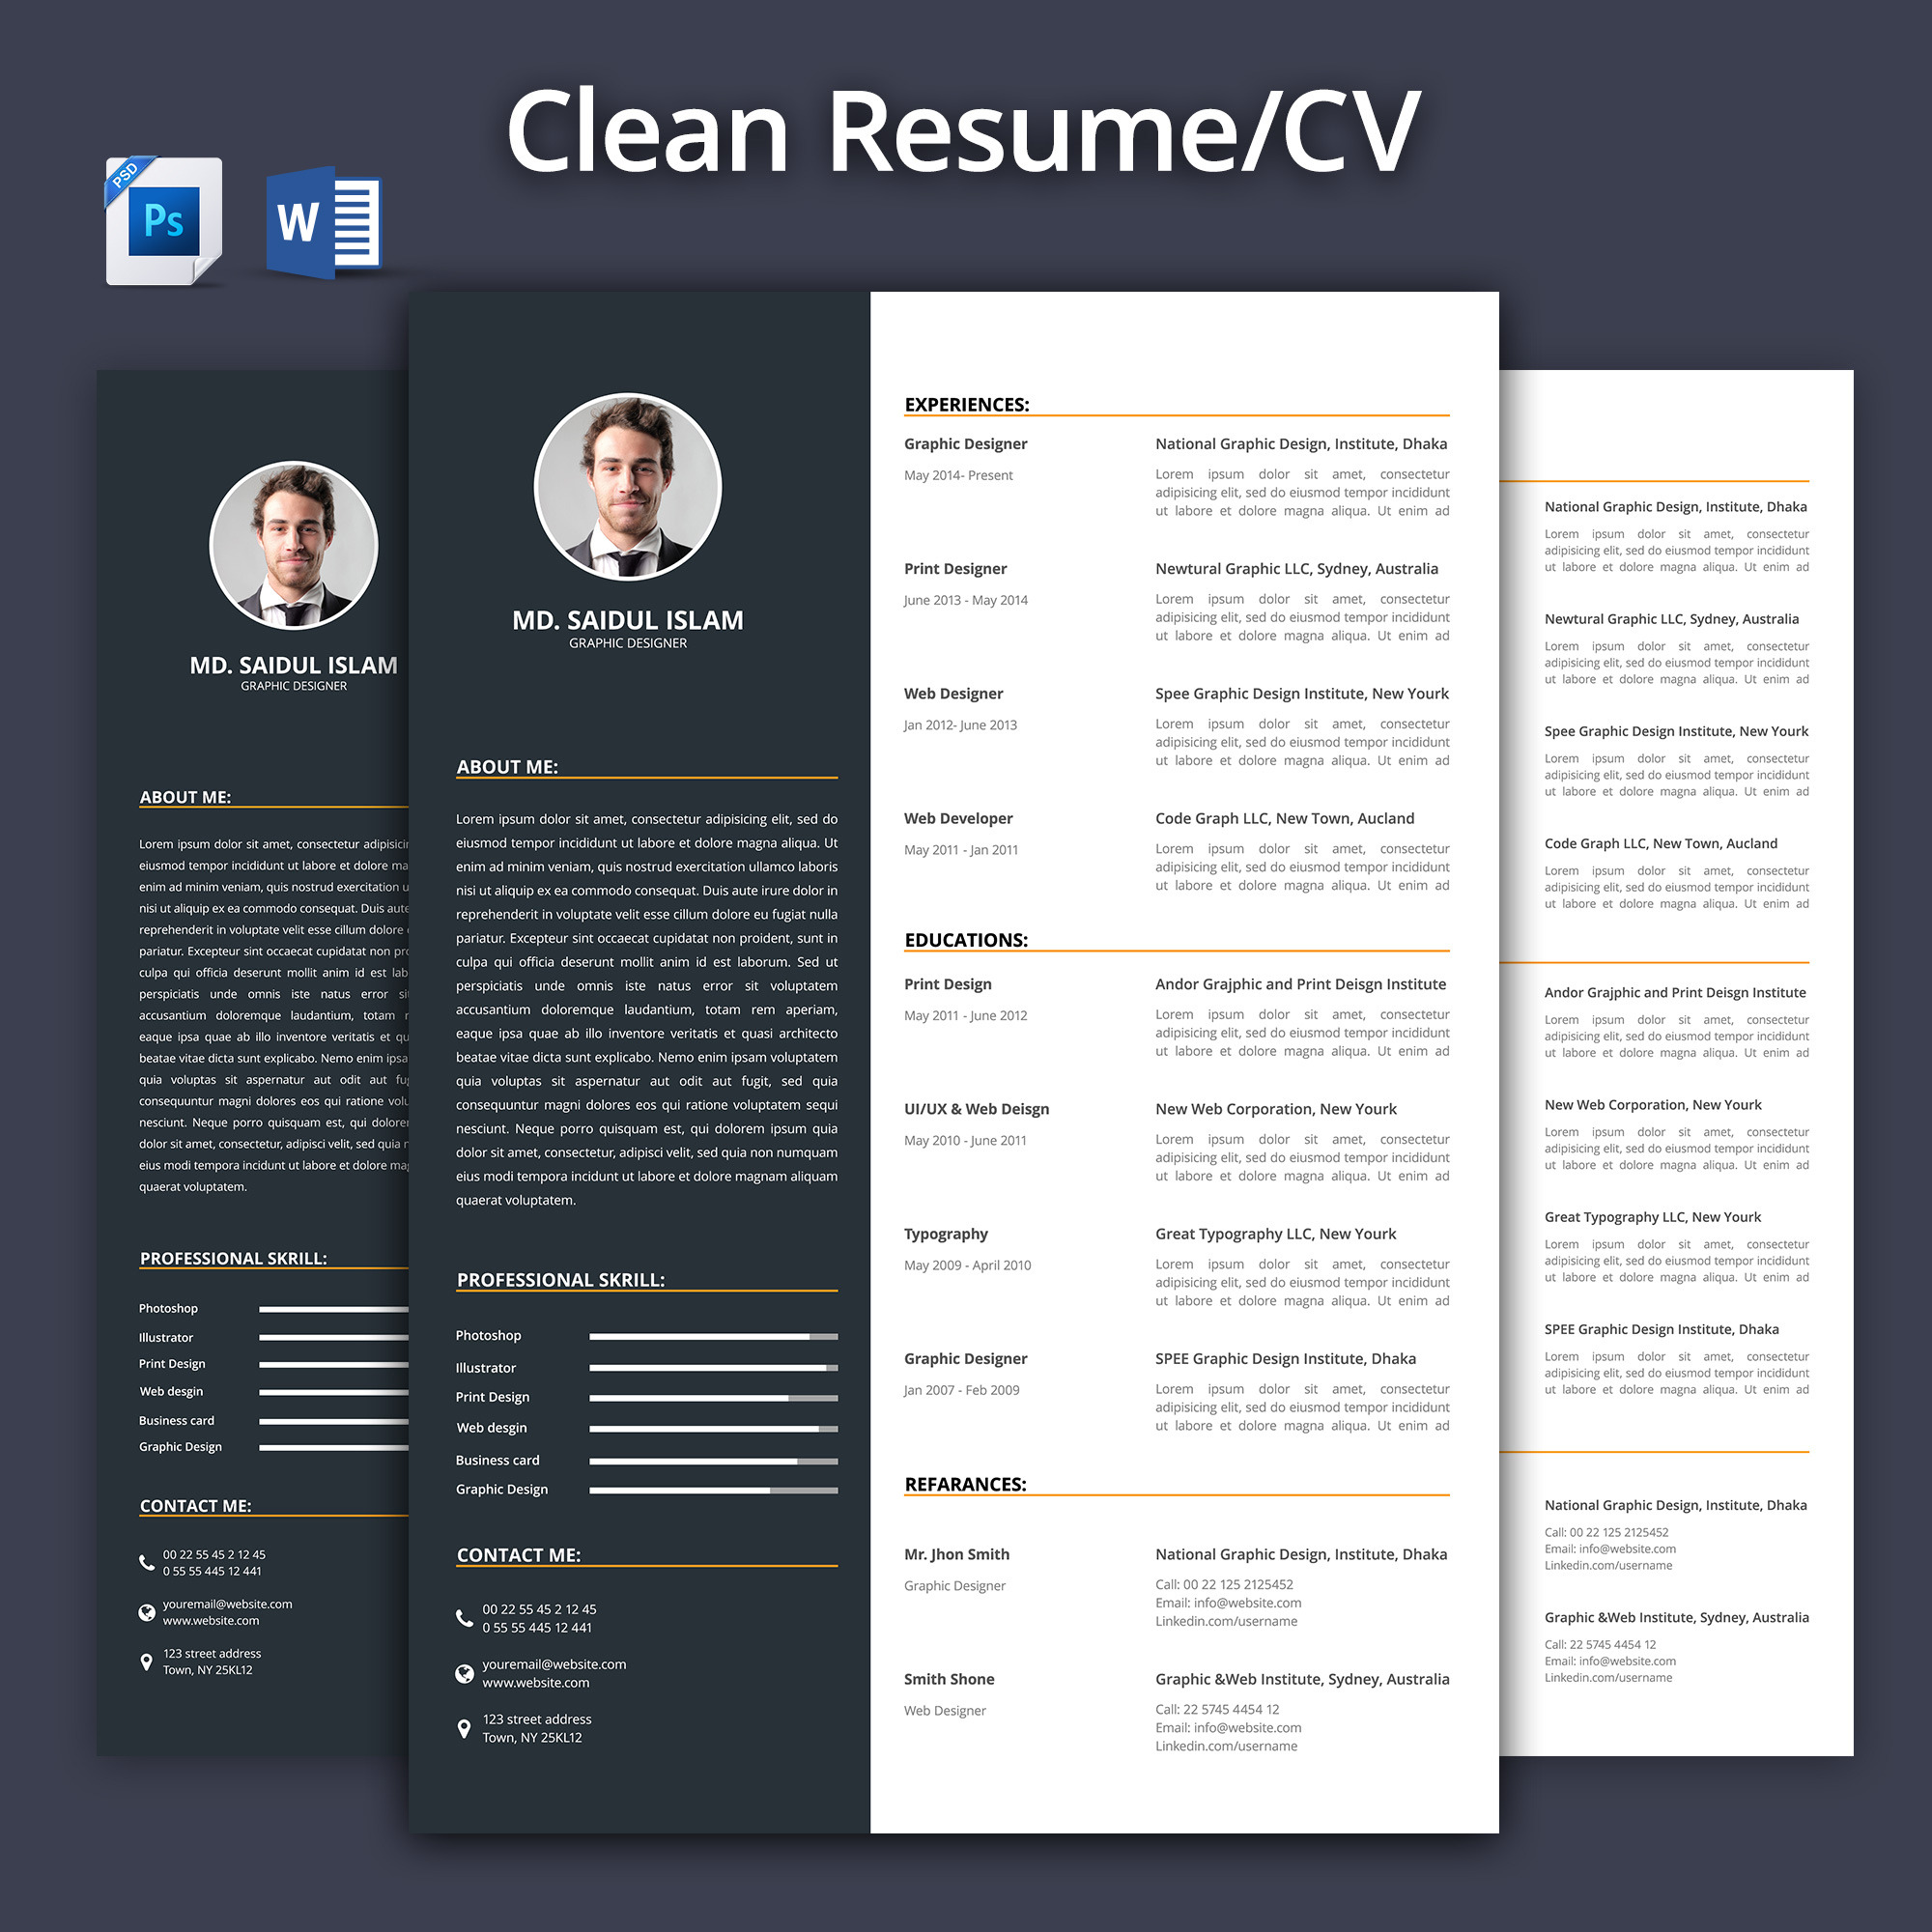 Clean Resume - CV 2017 ~ Resume Templates ~ Creative Market